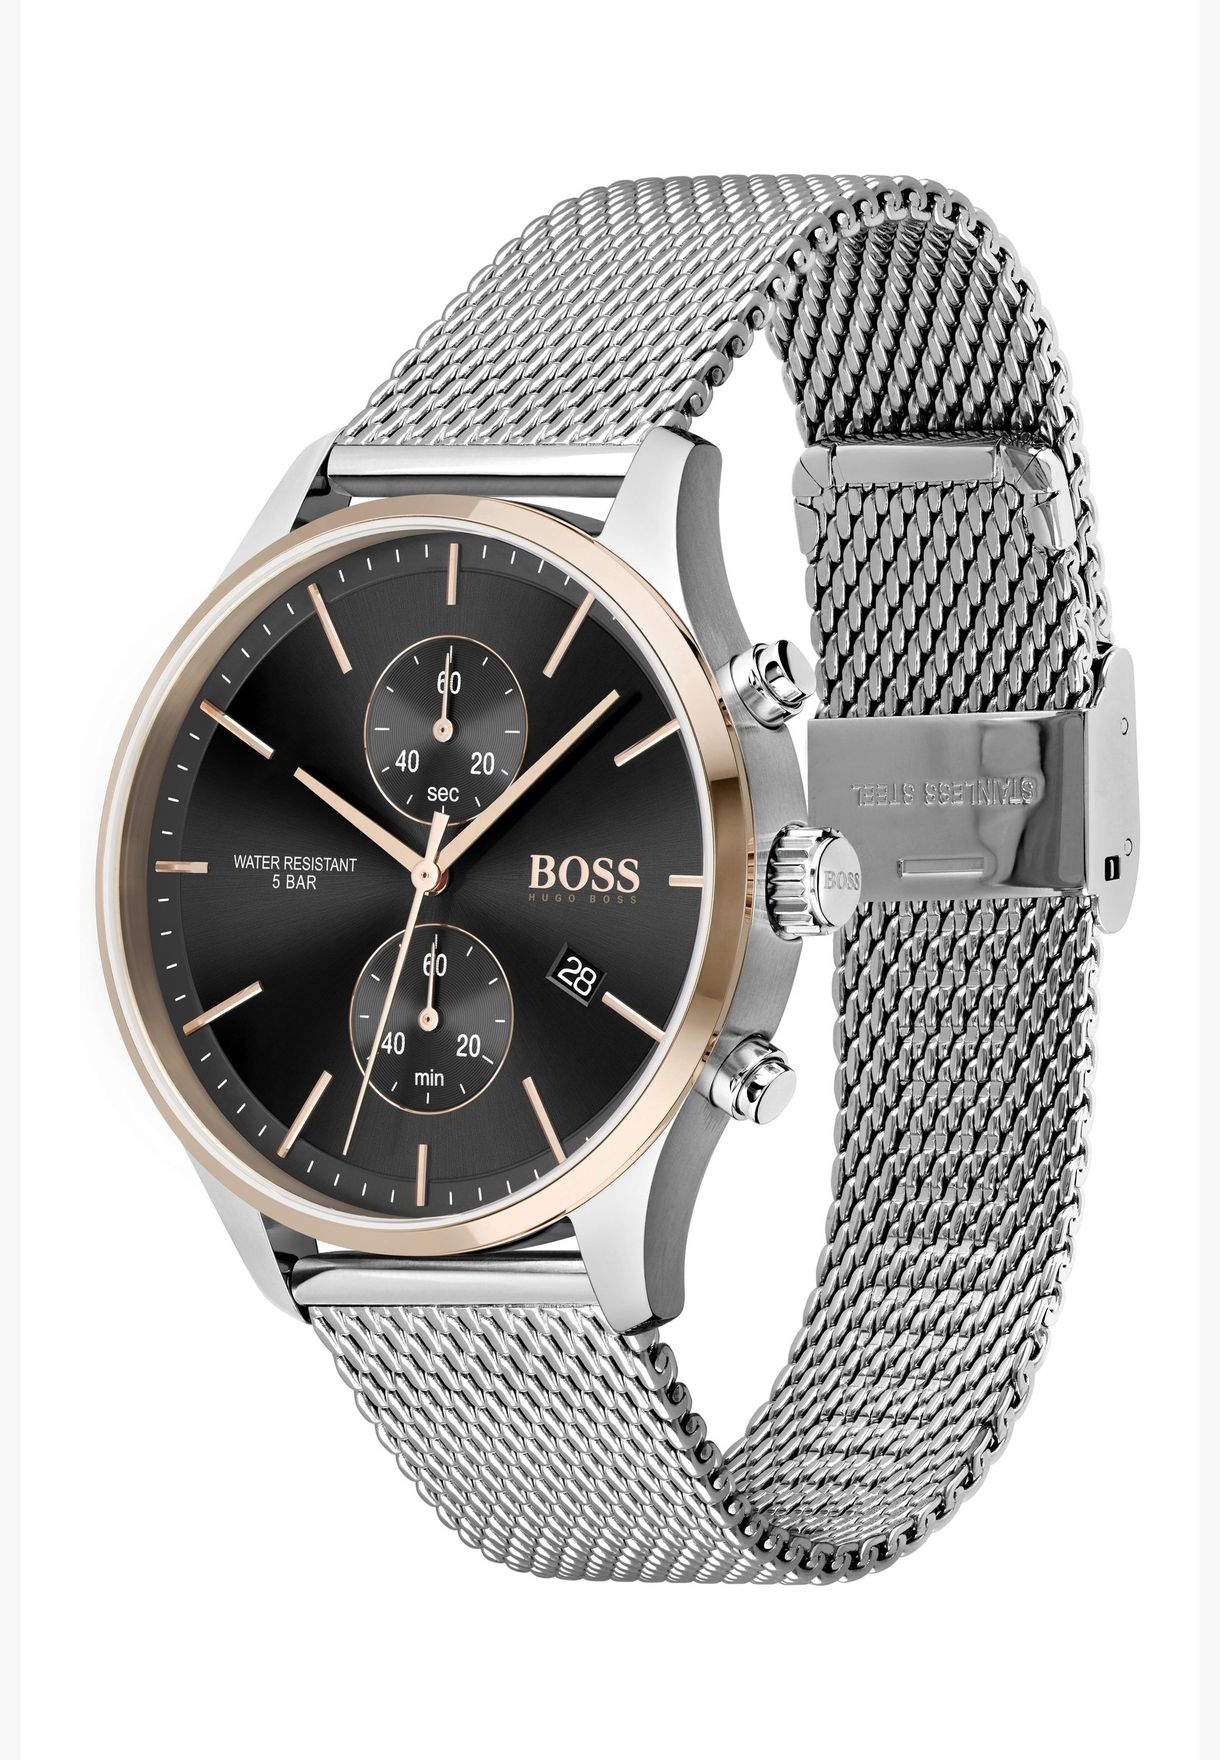 Hugo Boss ASSOCIATE Mesh Watch for Men - 1513805